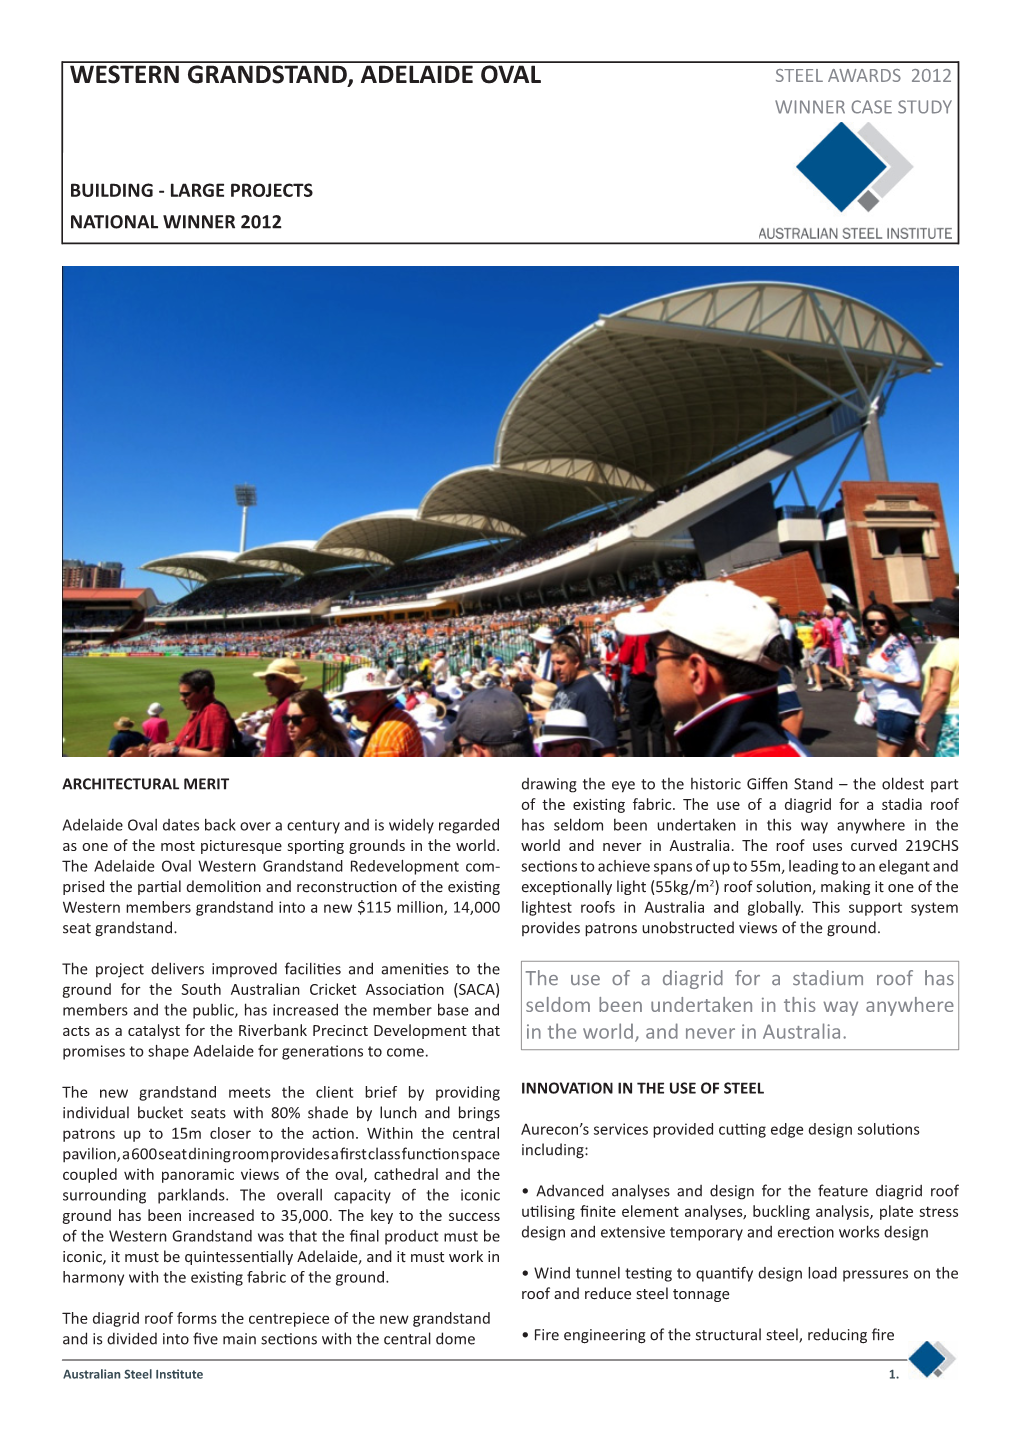 Western Grandstand, Adelaide Oval Steel Awards 2012 Winner Case Study